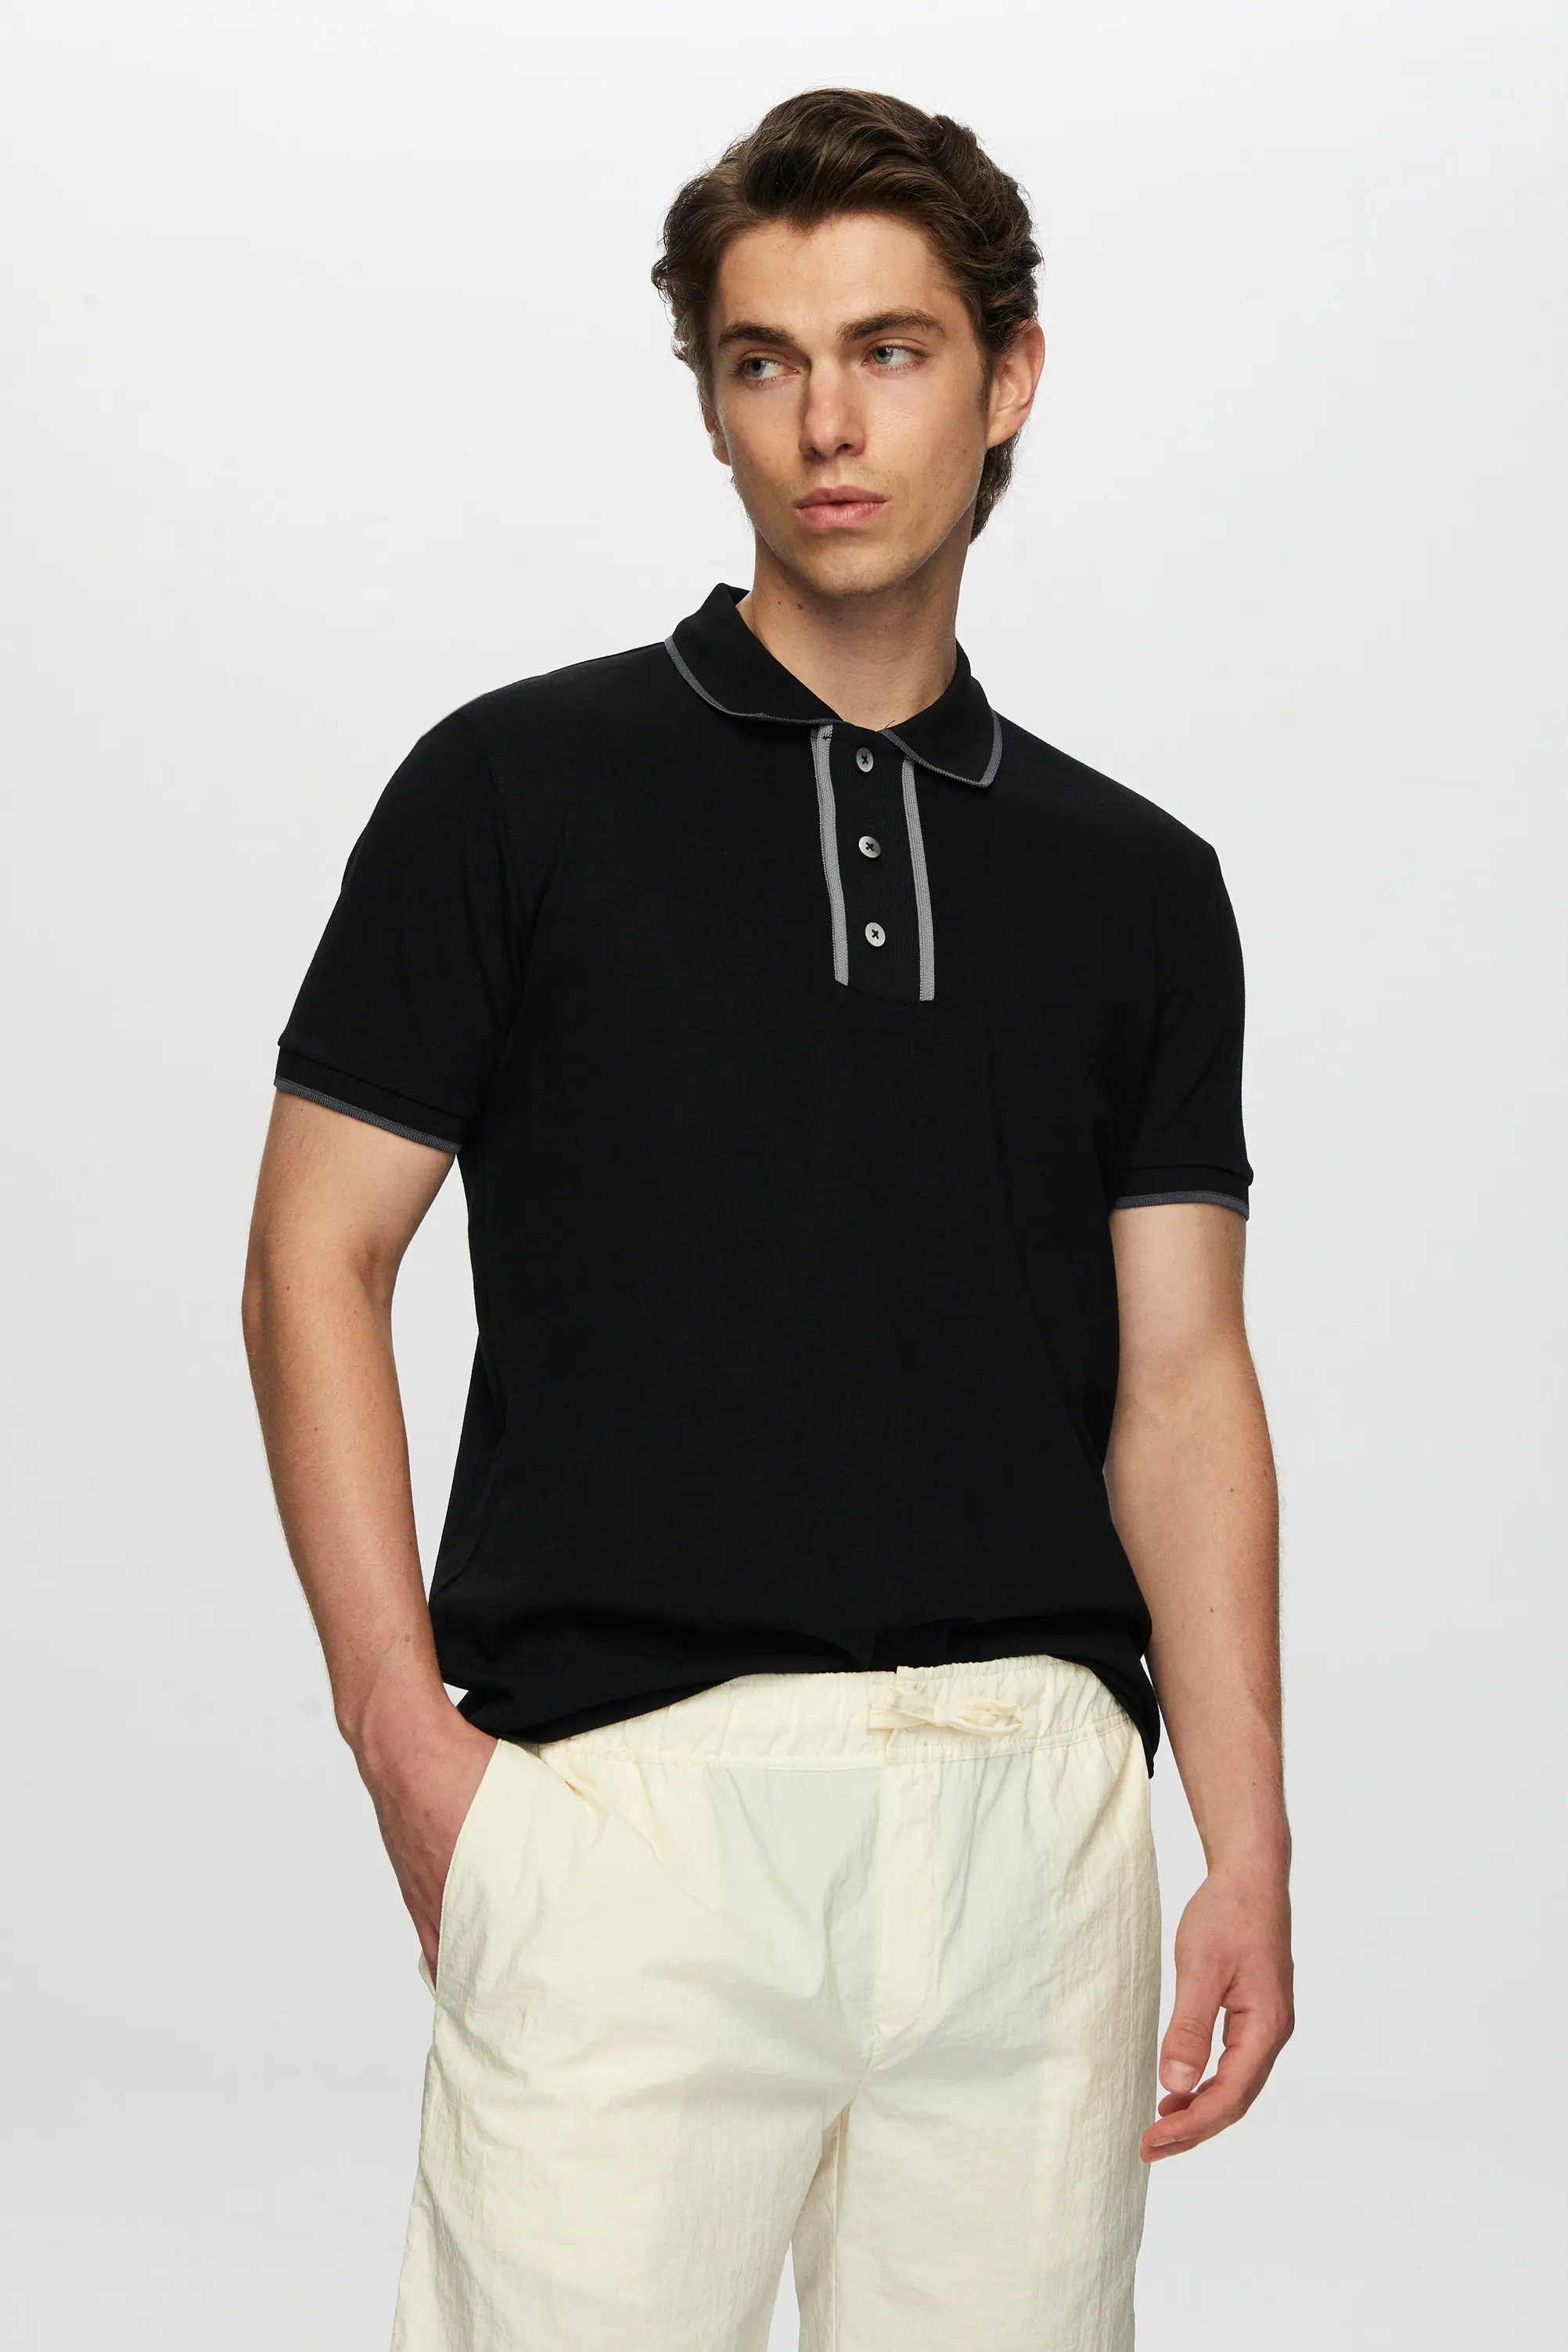 Damat Tween Tween Siyah Düğmeli Polo Yaka T-Shirt. 2